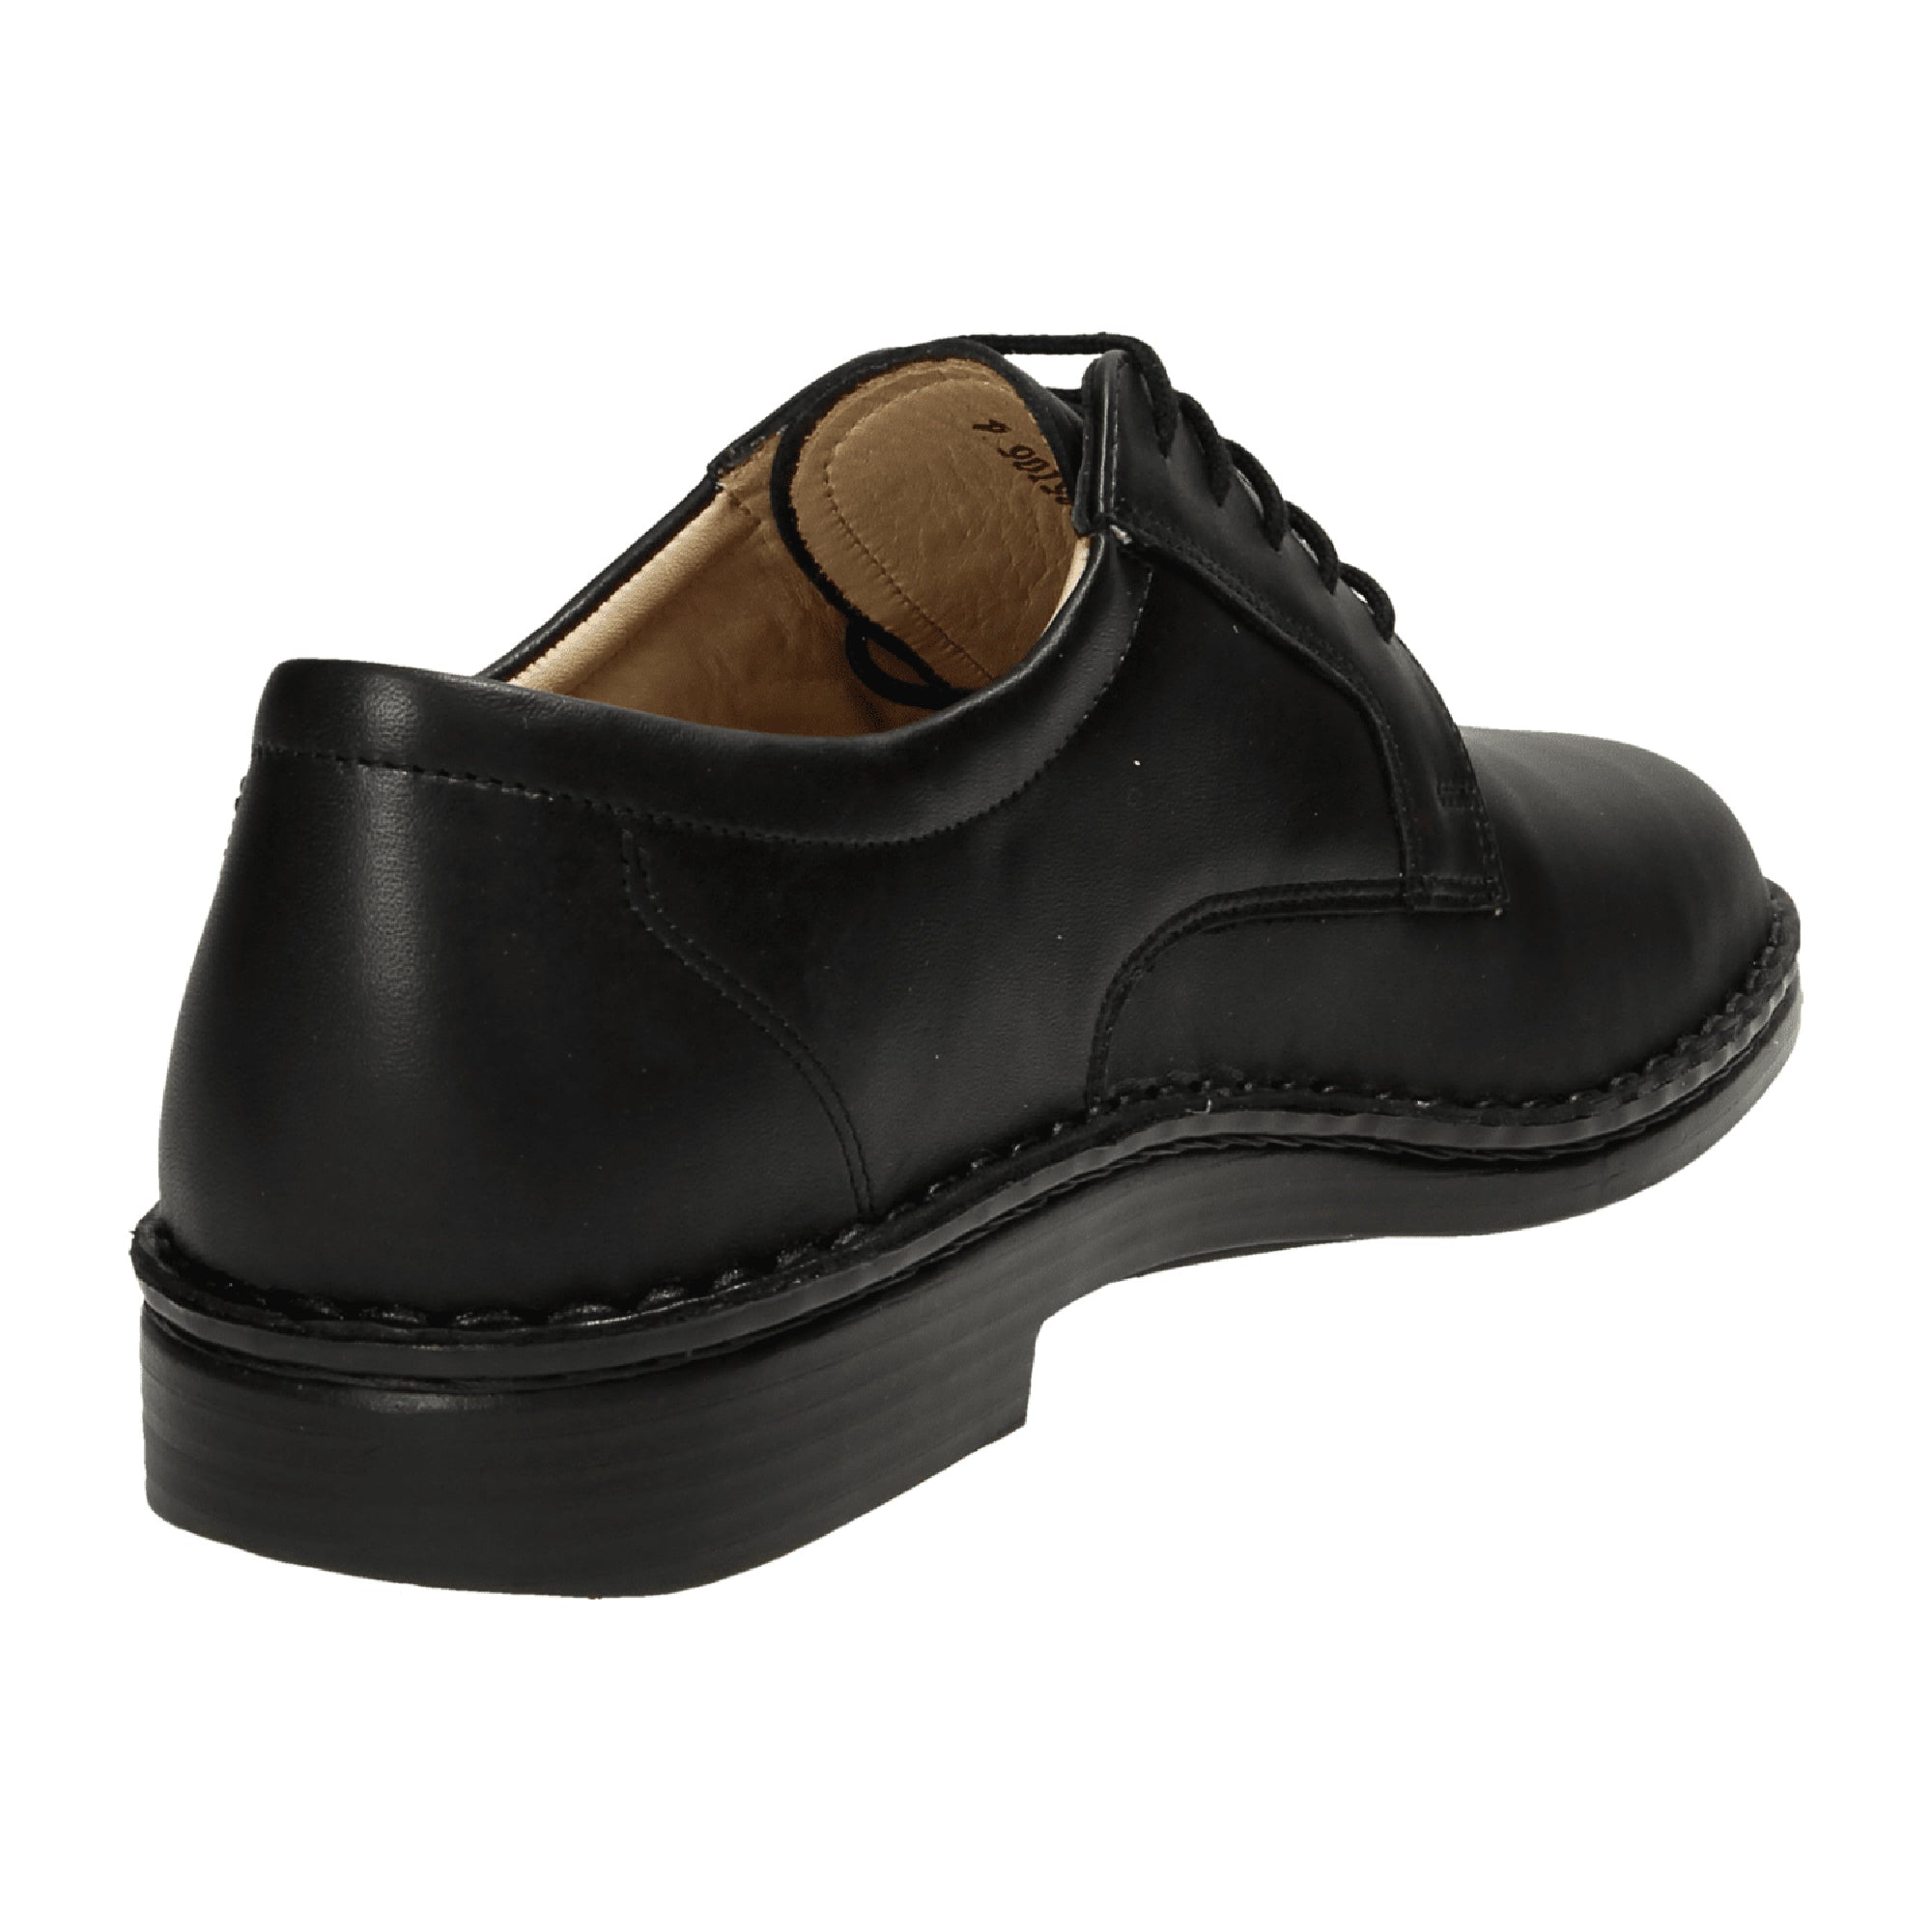 Finn Comfort Milano Men's Black Leather Shoes – Stylish & Durable